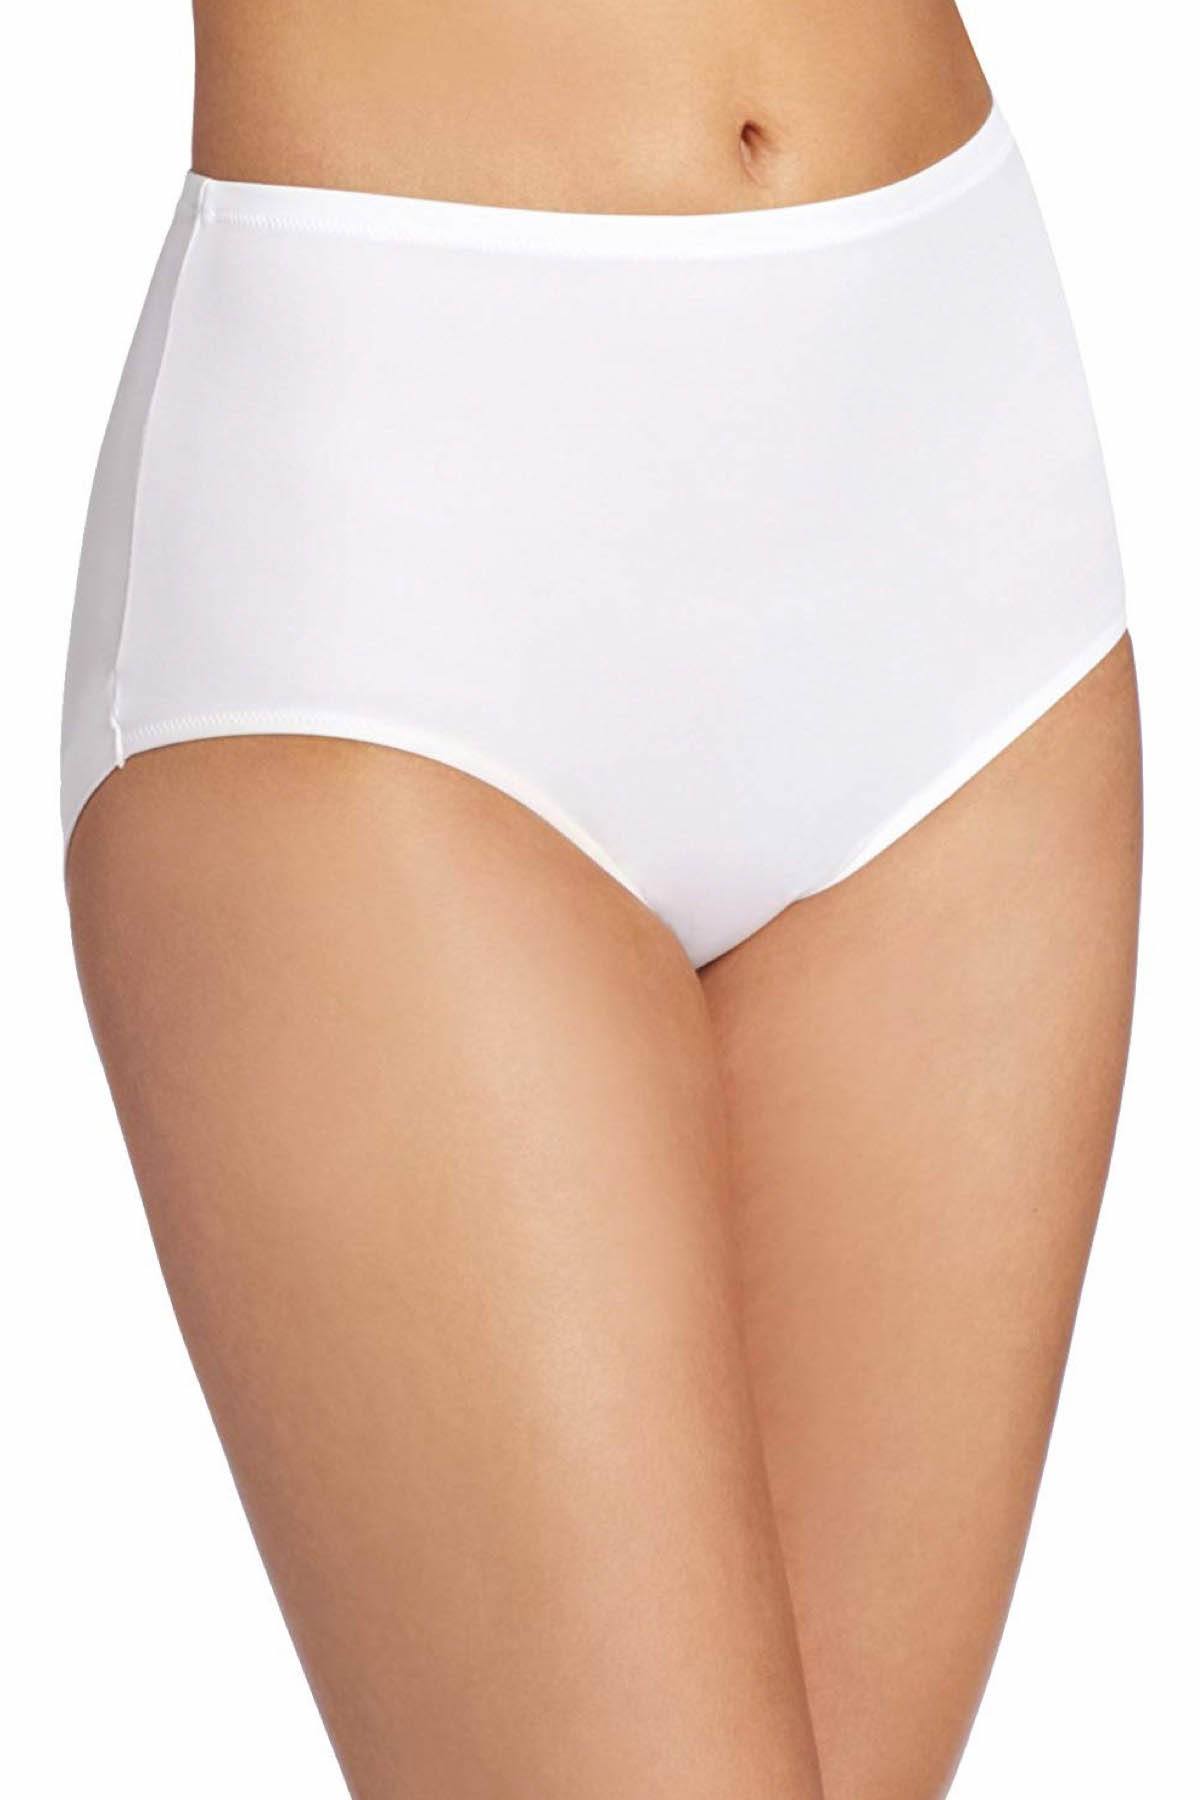 Warner's White No-Wedgies No-Worries Modern Brief Panty